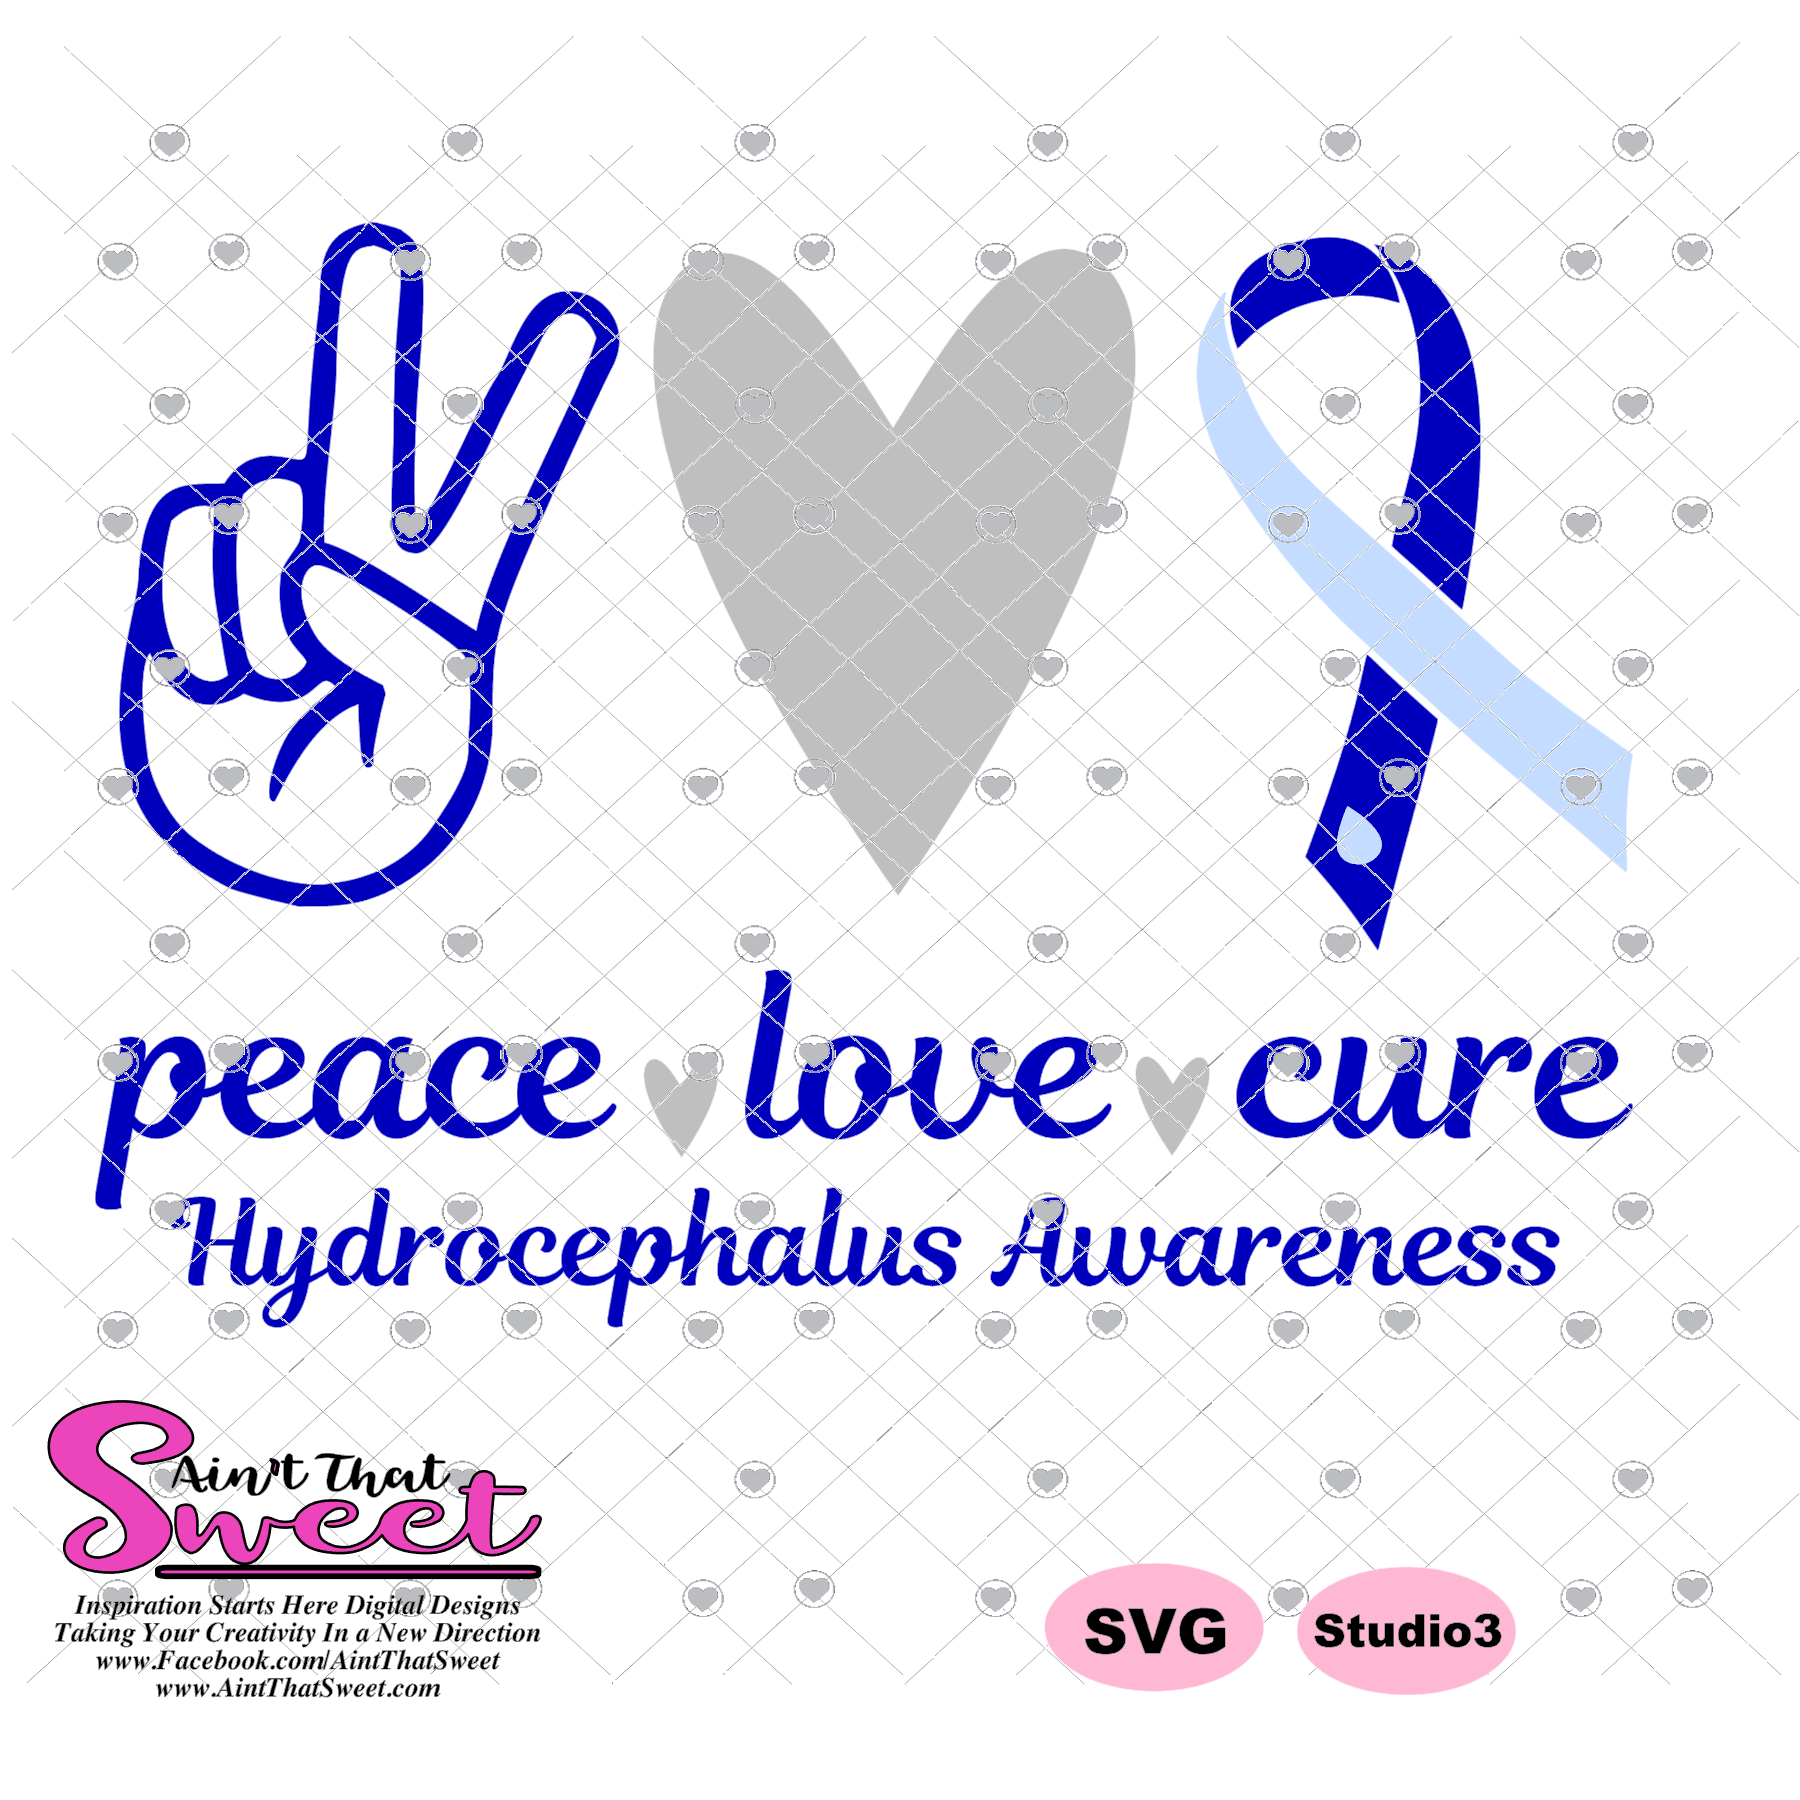 Download Hydrocephalus Awareness-Peace Love Cure - Transparent PNG ...